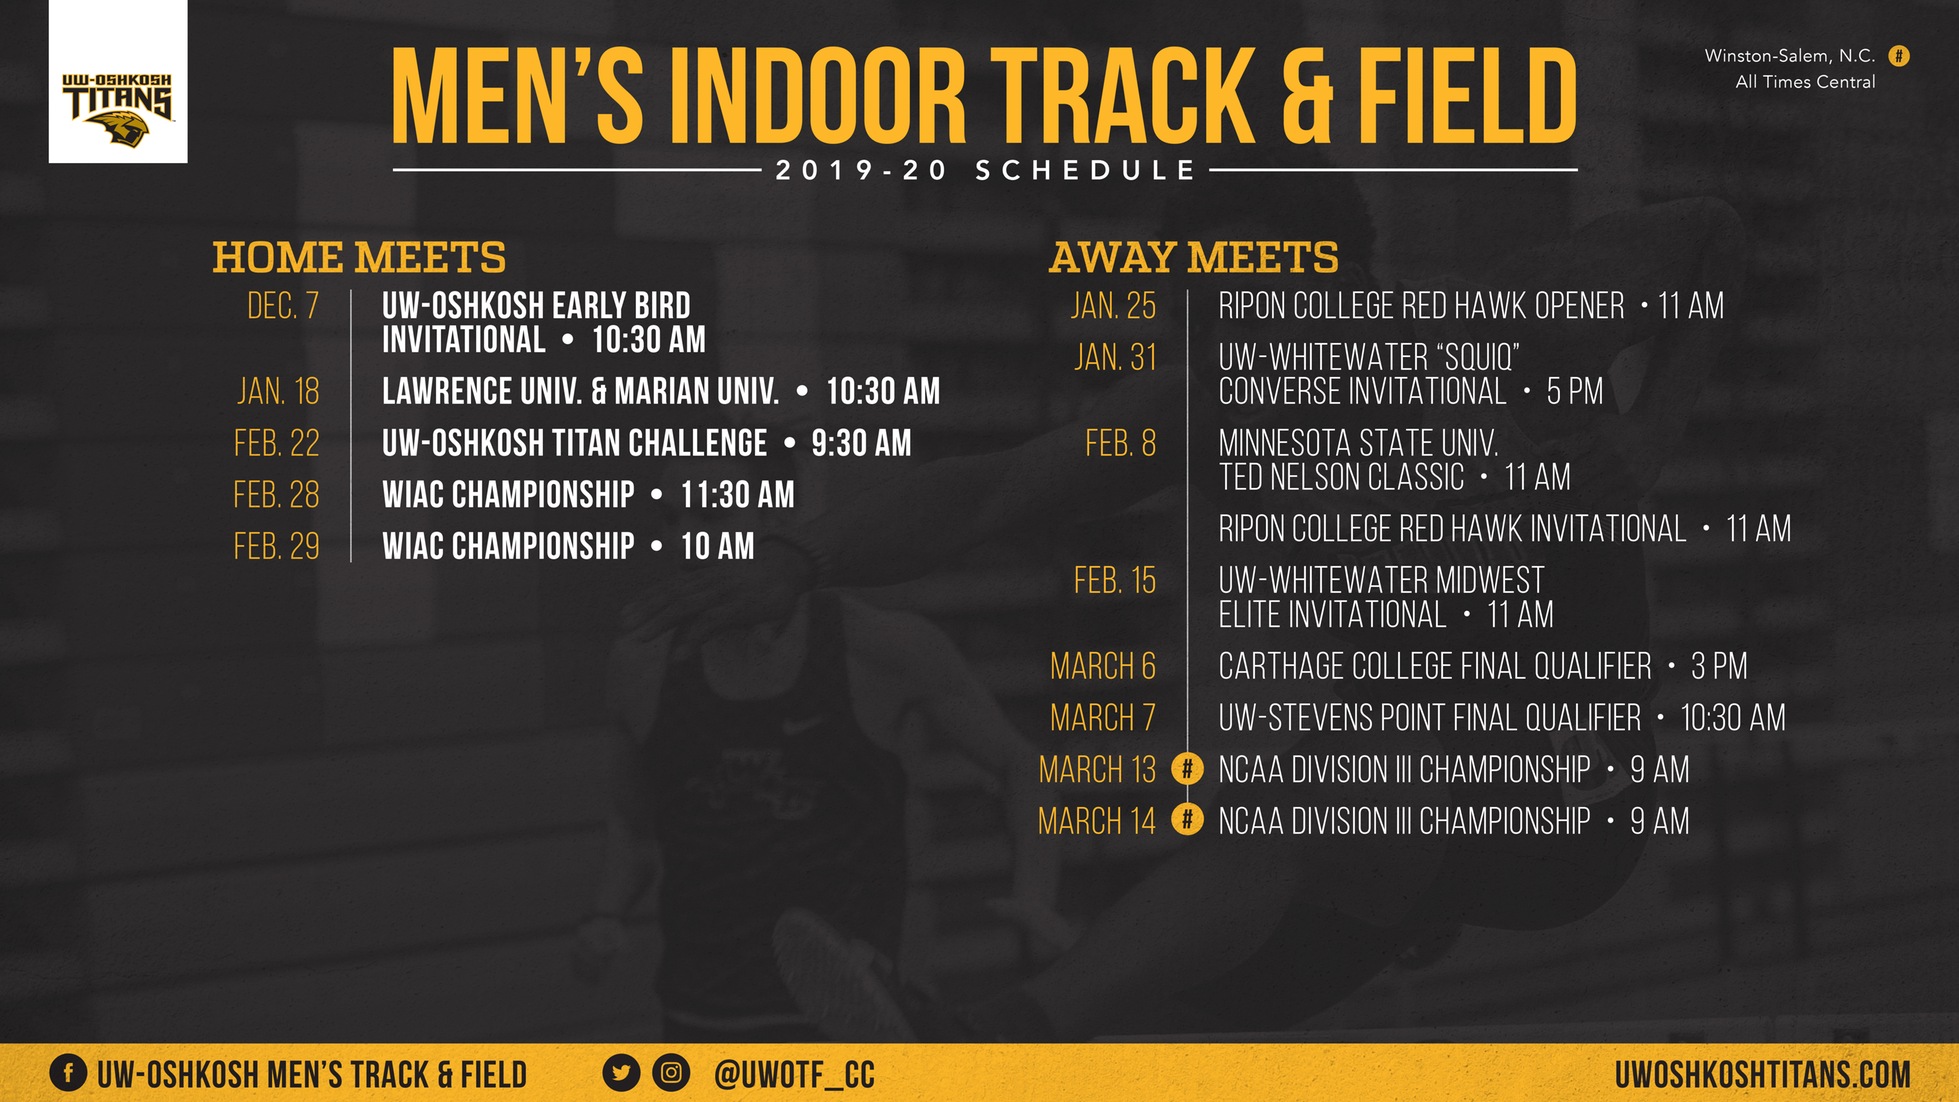 Men's Indoor Track & Field Schedule Features Four Home Meets, Including WIAC Championship